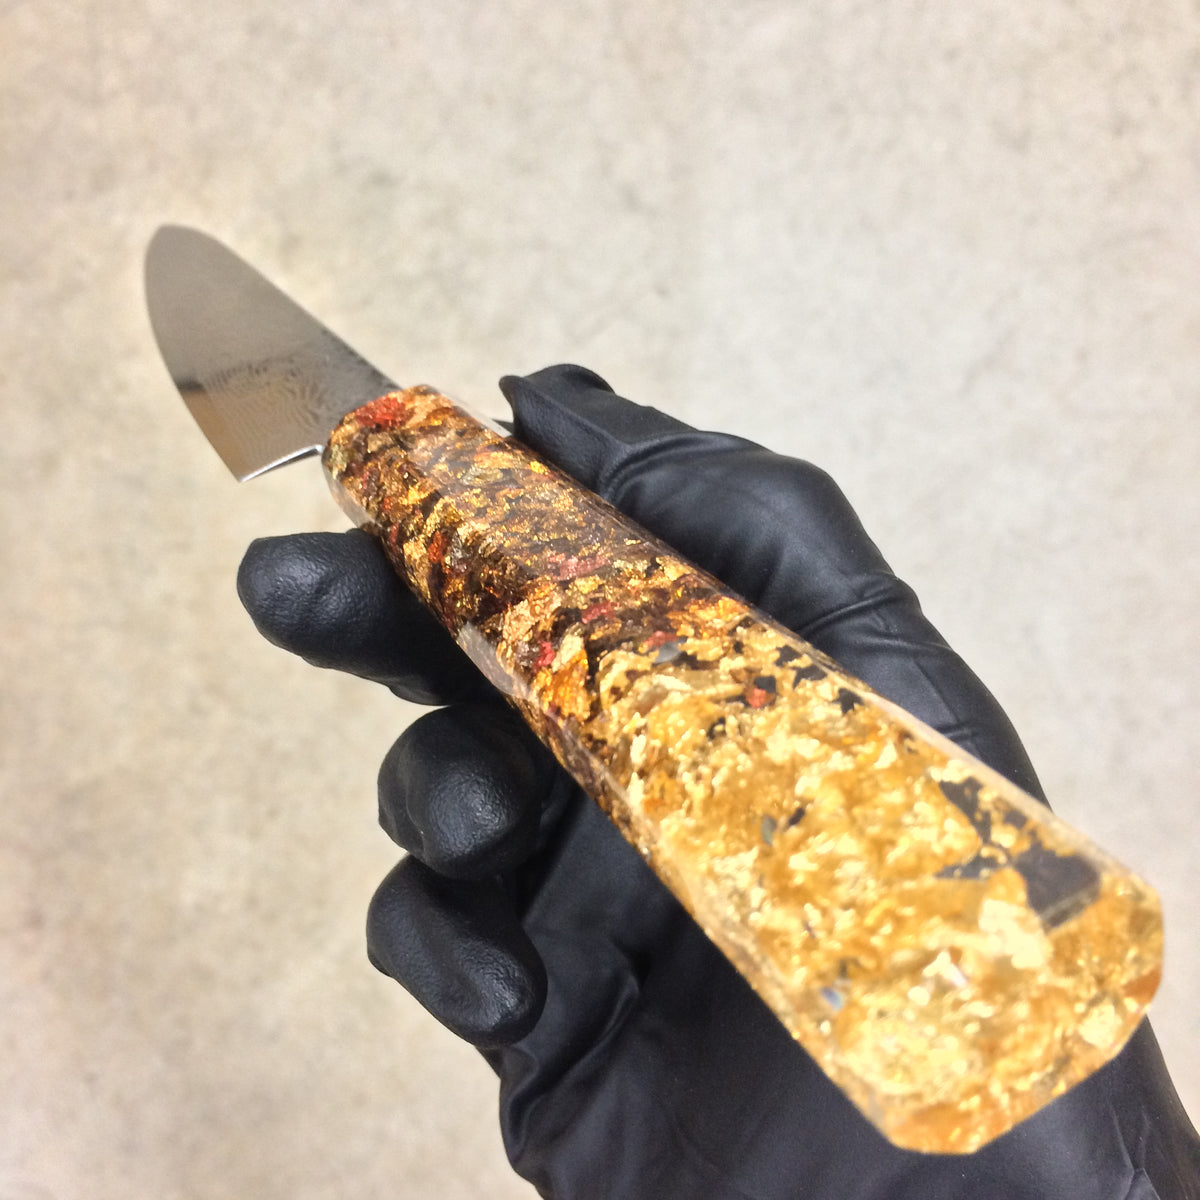 Honey Dagger - 6in (150mm) Damascus Petty Culinary Knife